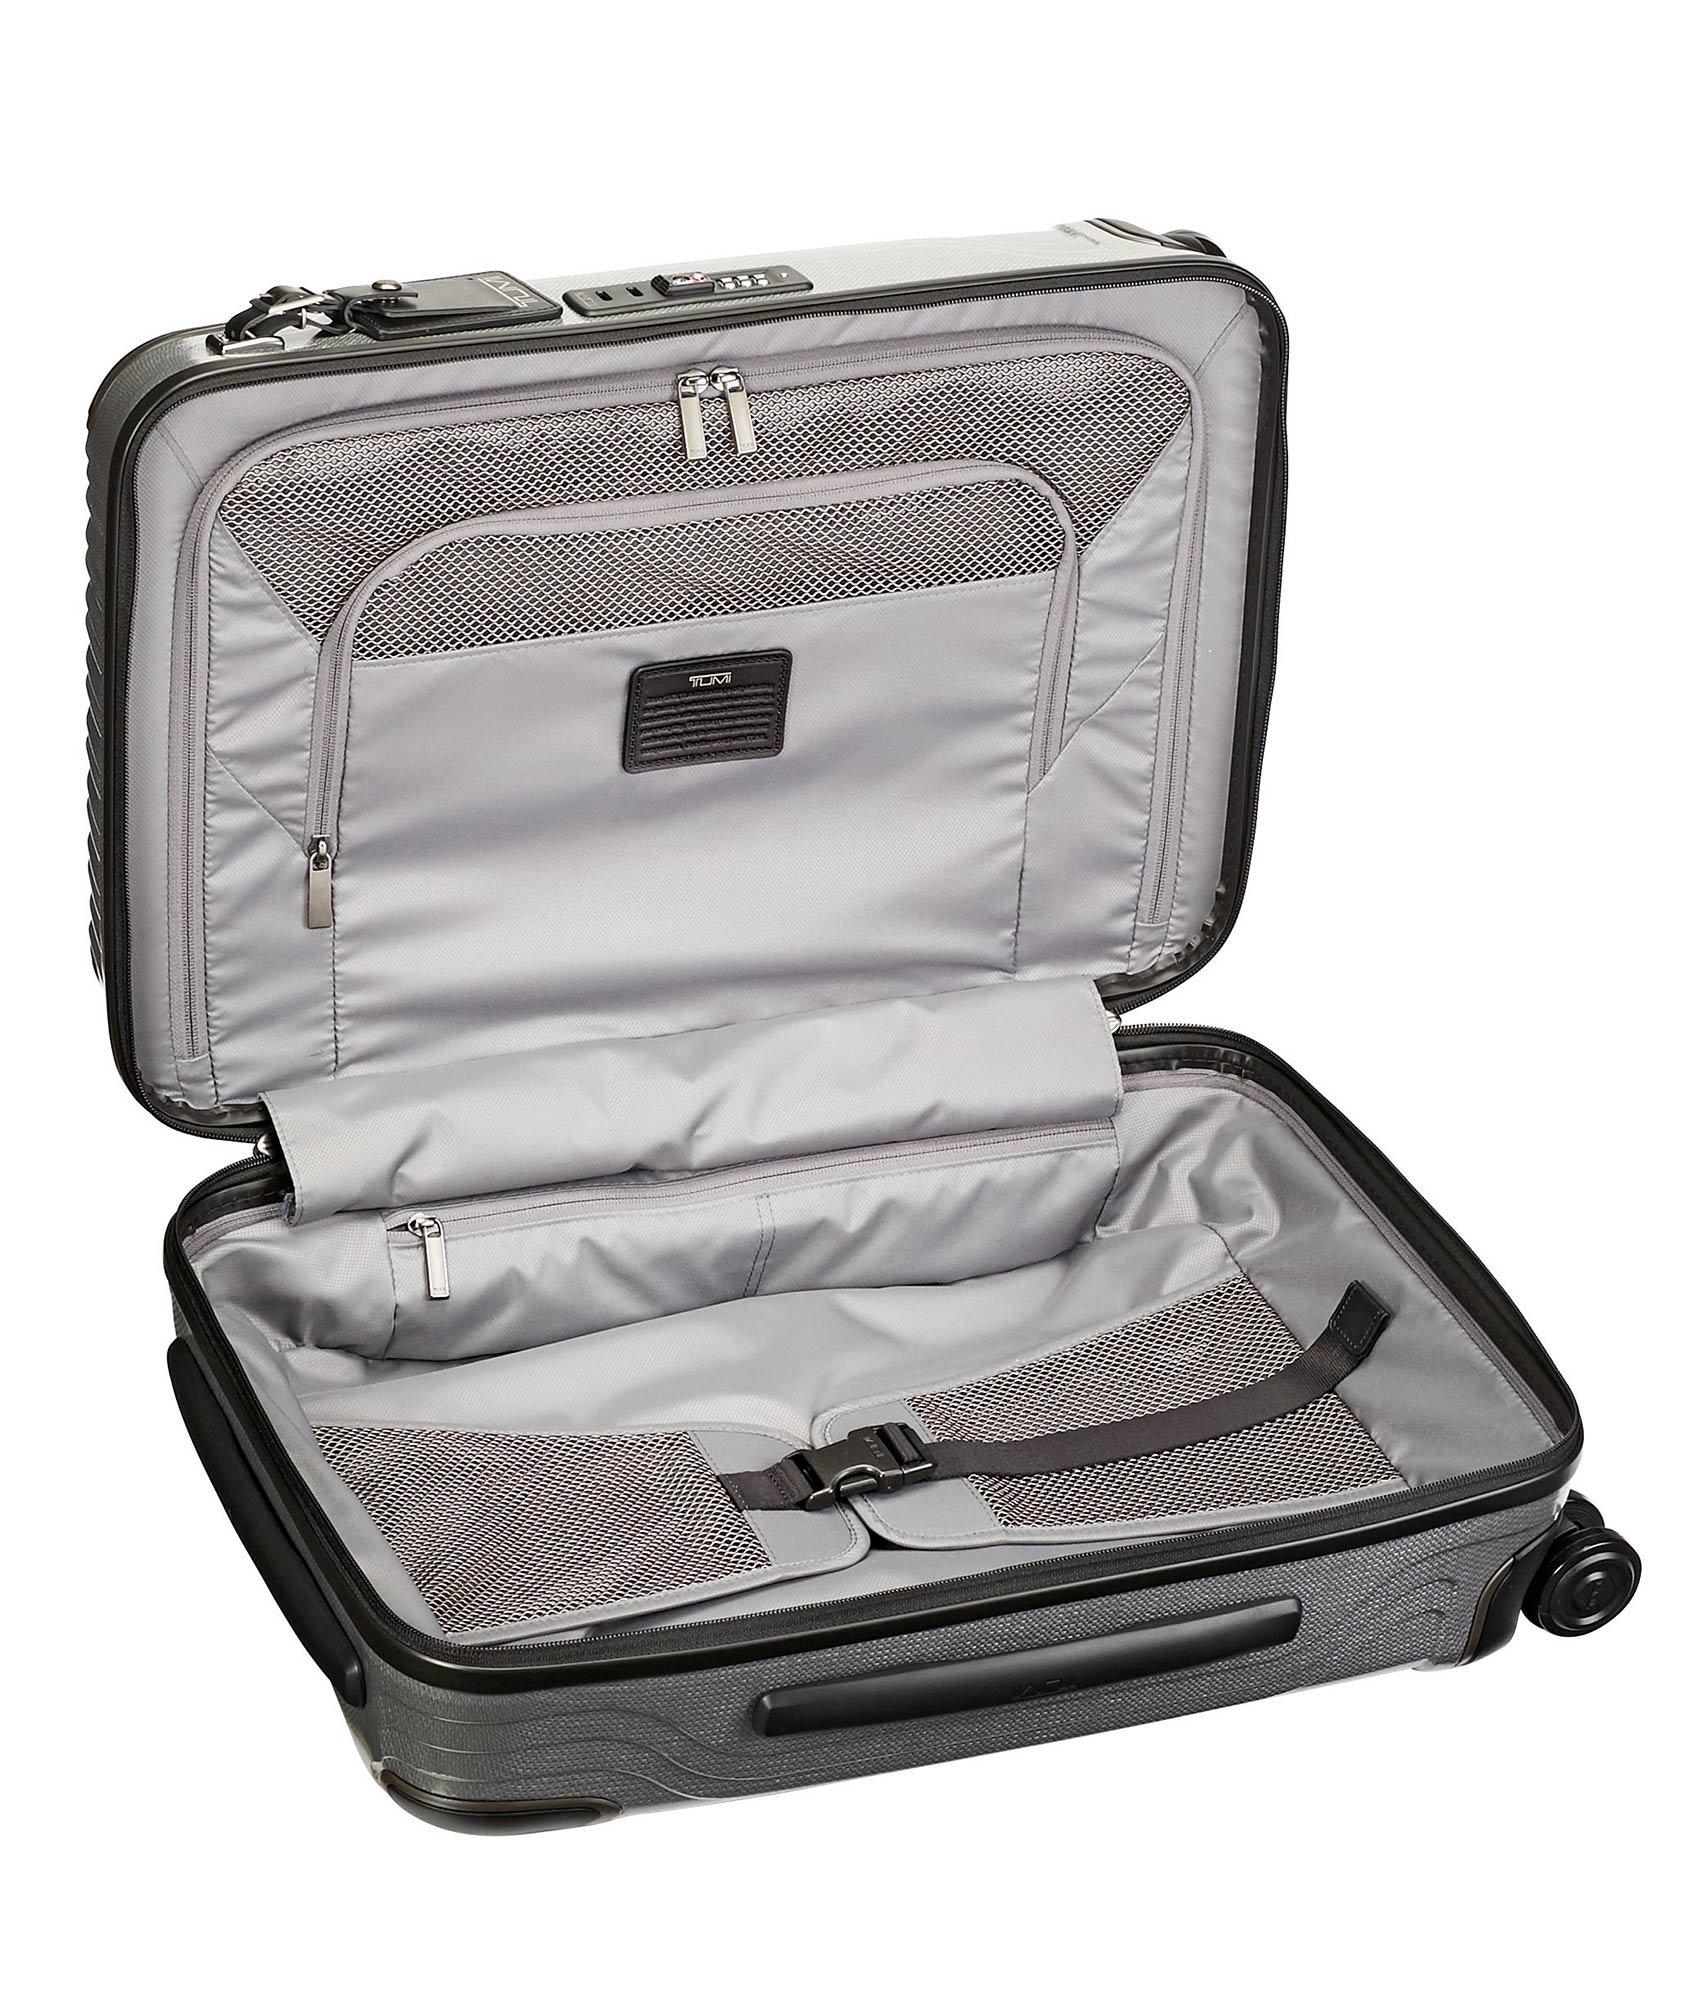 International Carry-On Suitcase image 2